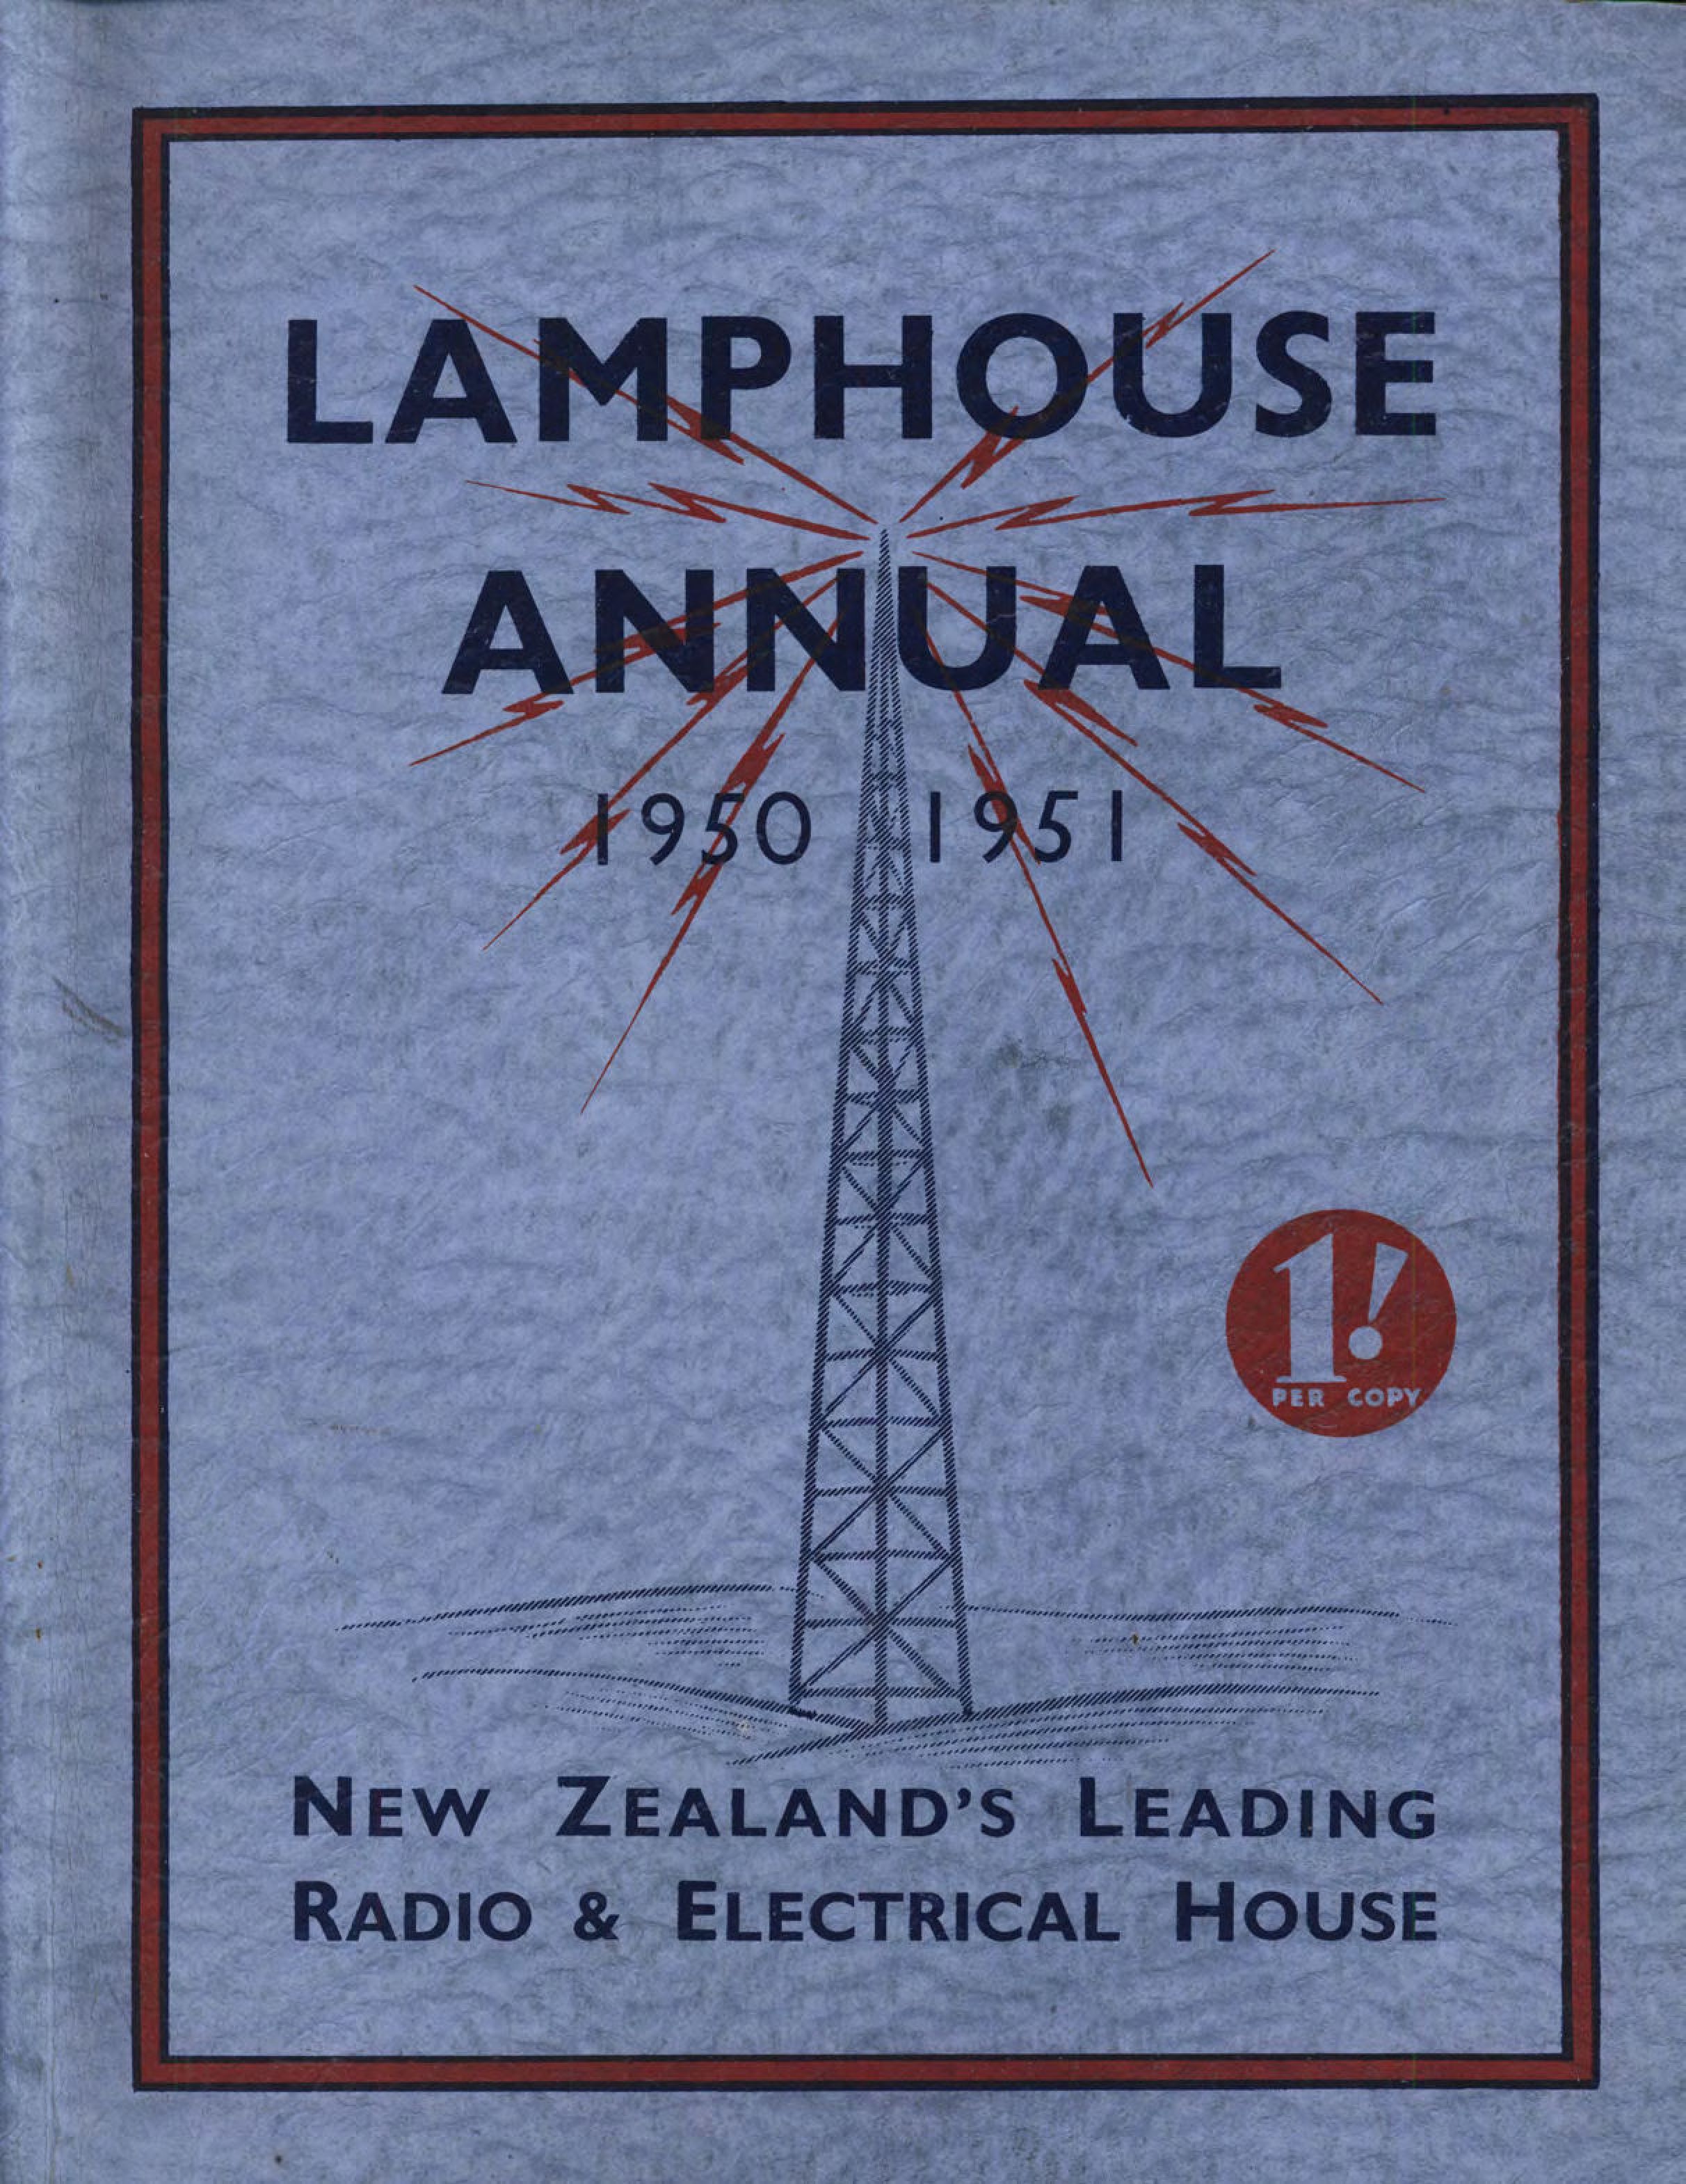 Lamphouse Annual 1950